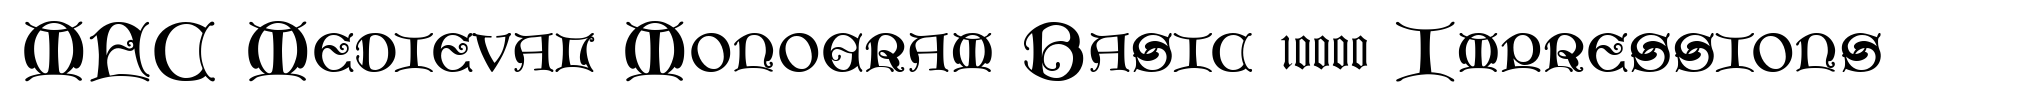 MFC Medieval Monogram Basic 10000 Impressions image